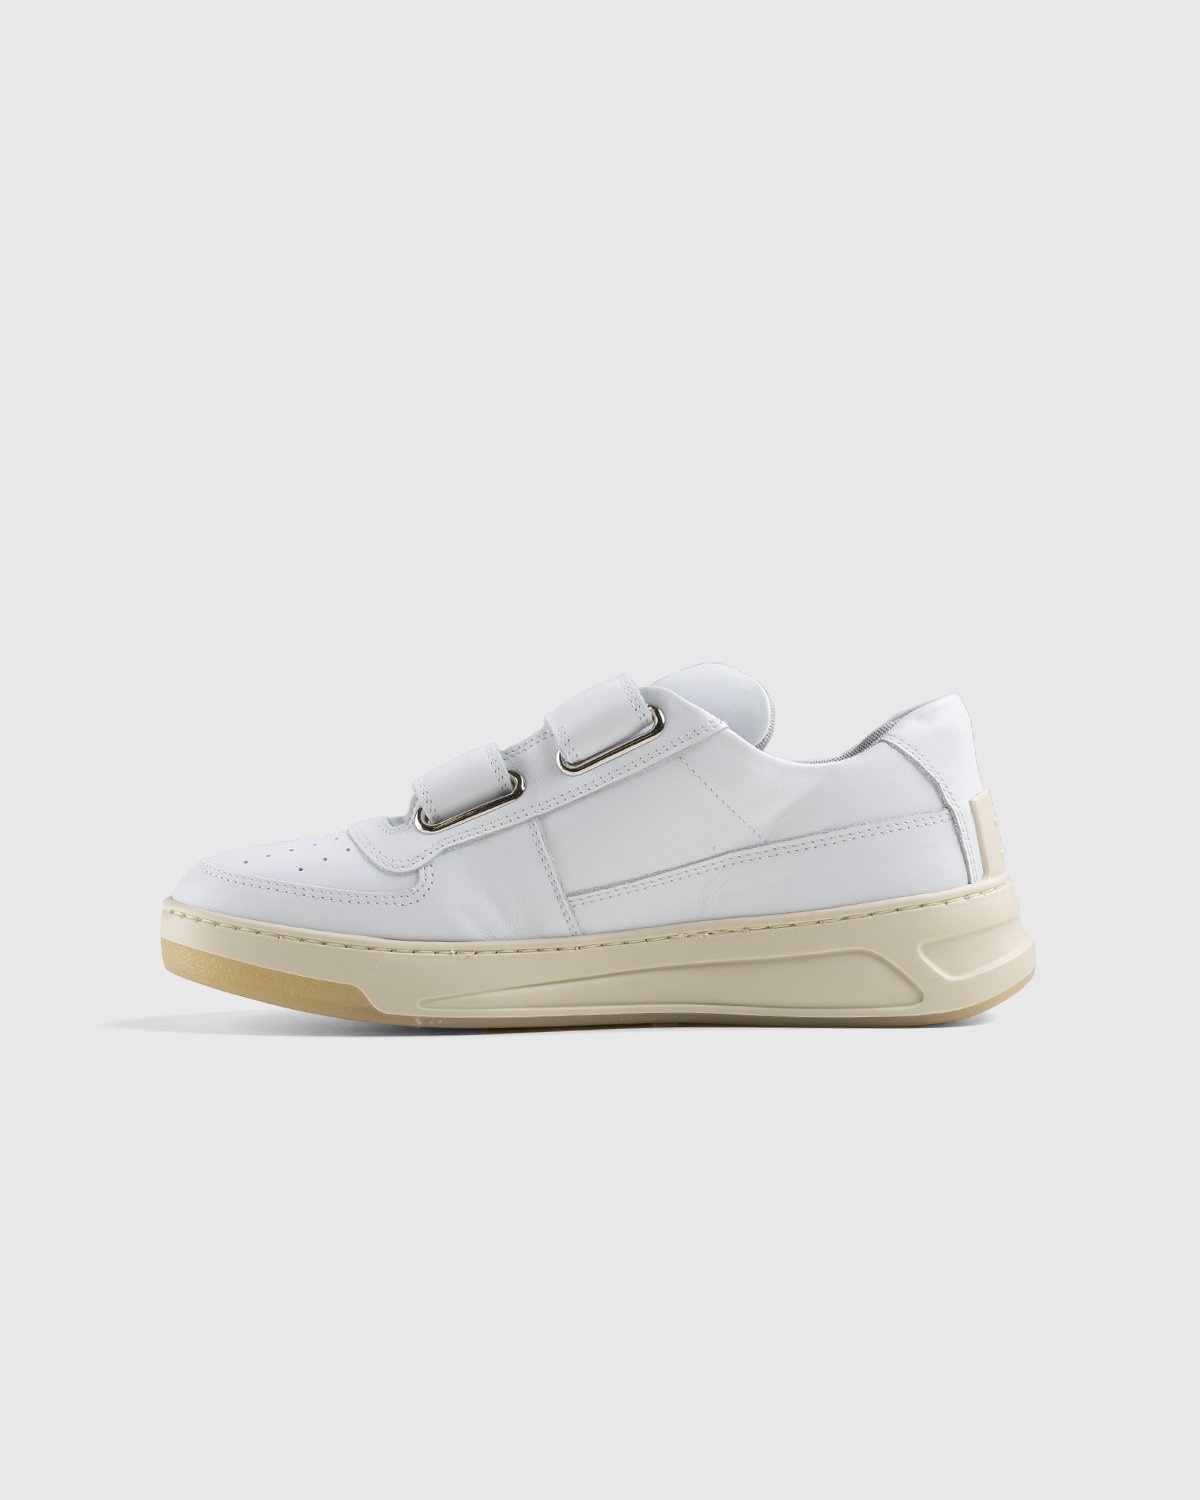 Acne Studios – Perey Velcro Strap Sneakers White - Sneakers - White - Image 2